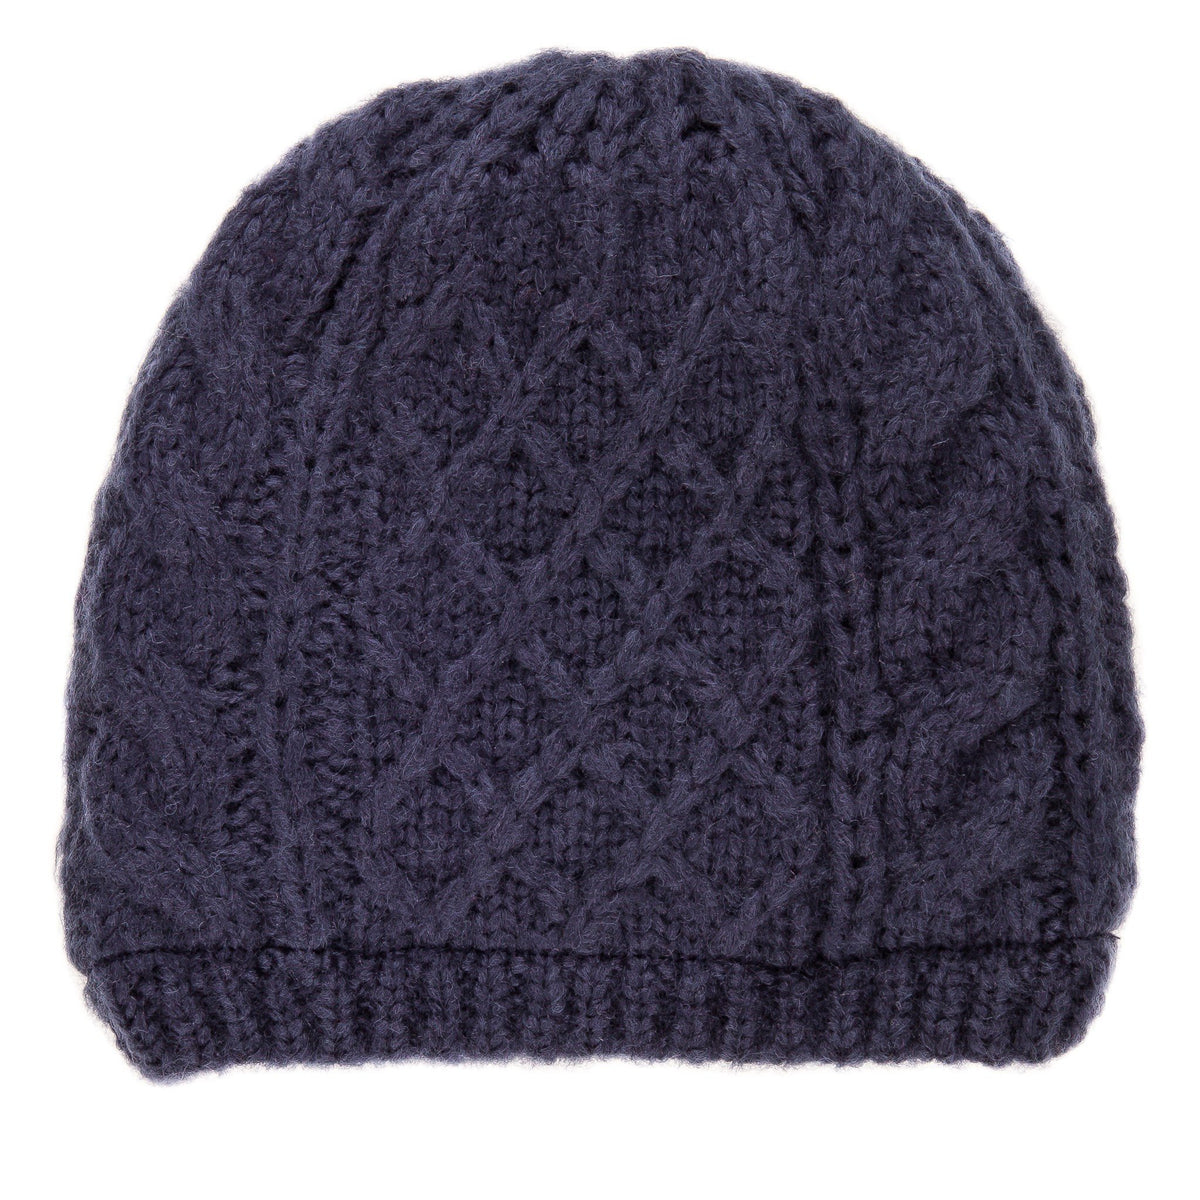 Men's Super-Soft Cable Knit Avalanche Winter Hat - Navy